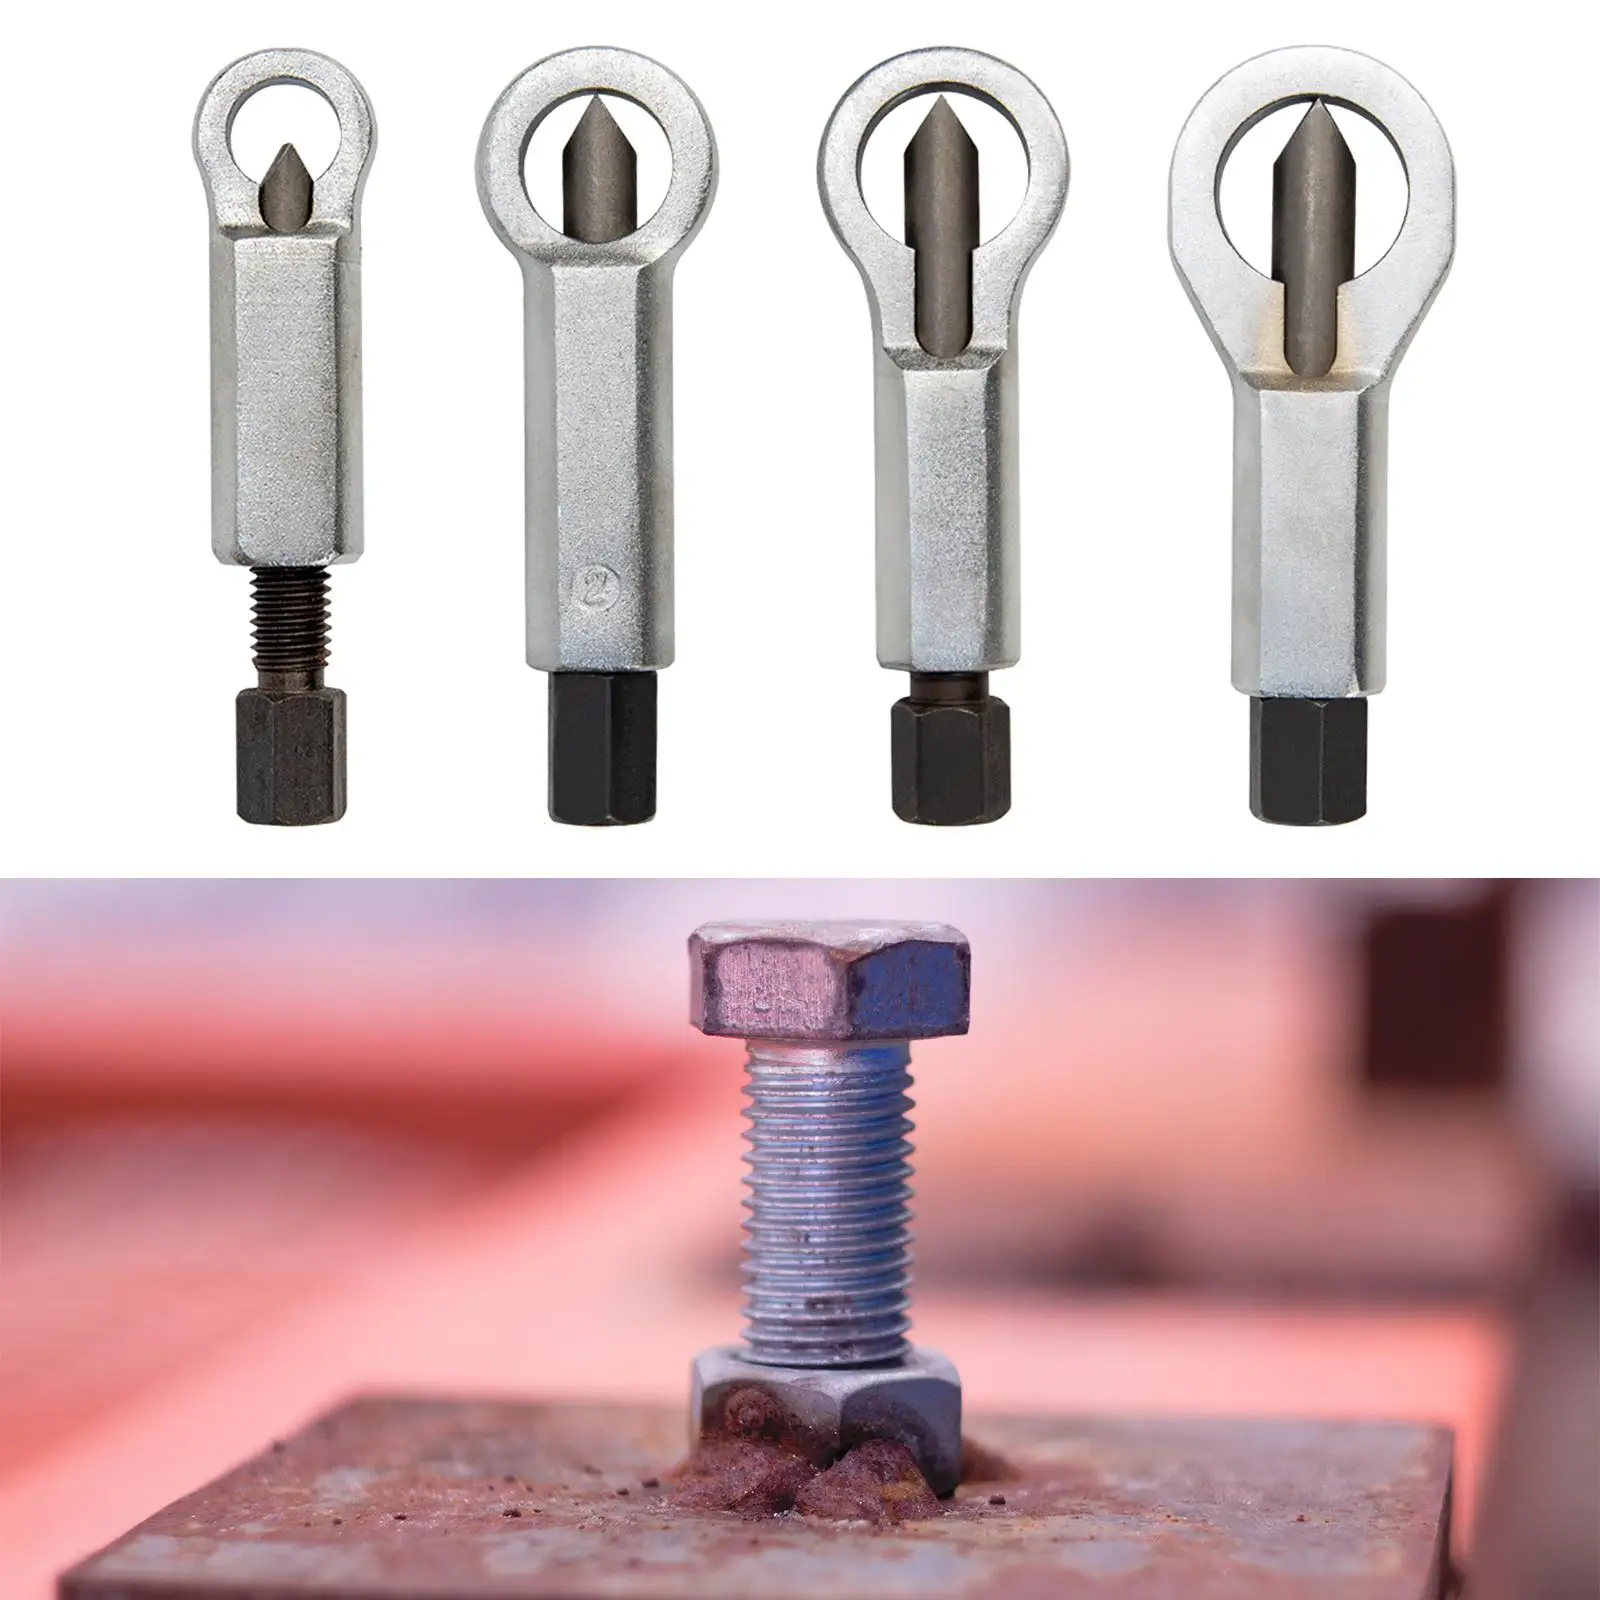 Manual Pressure Nut Remover Remover Extractor Tool Metal Nut Splitter Remover for Damaged Nuts Home Workshop Removing Broken